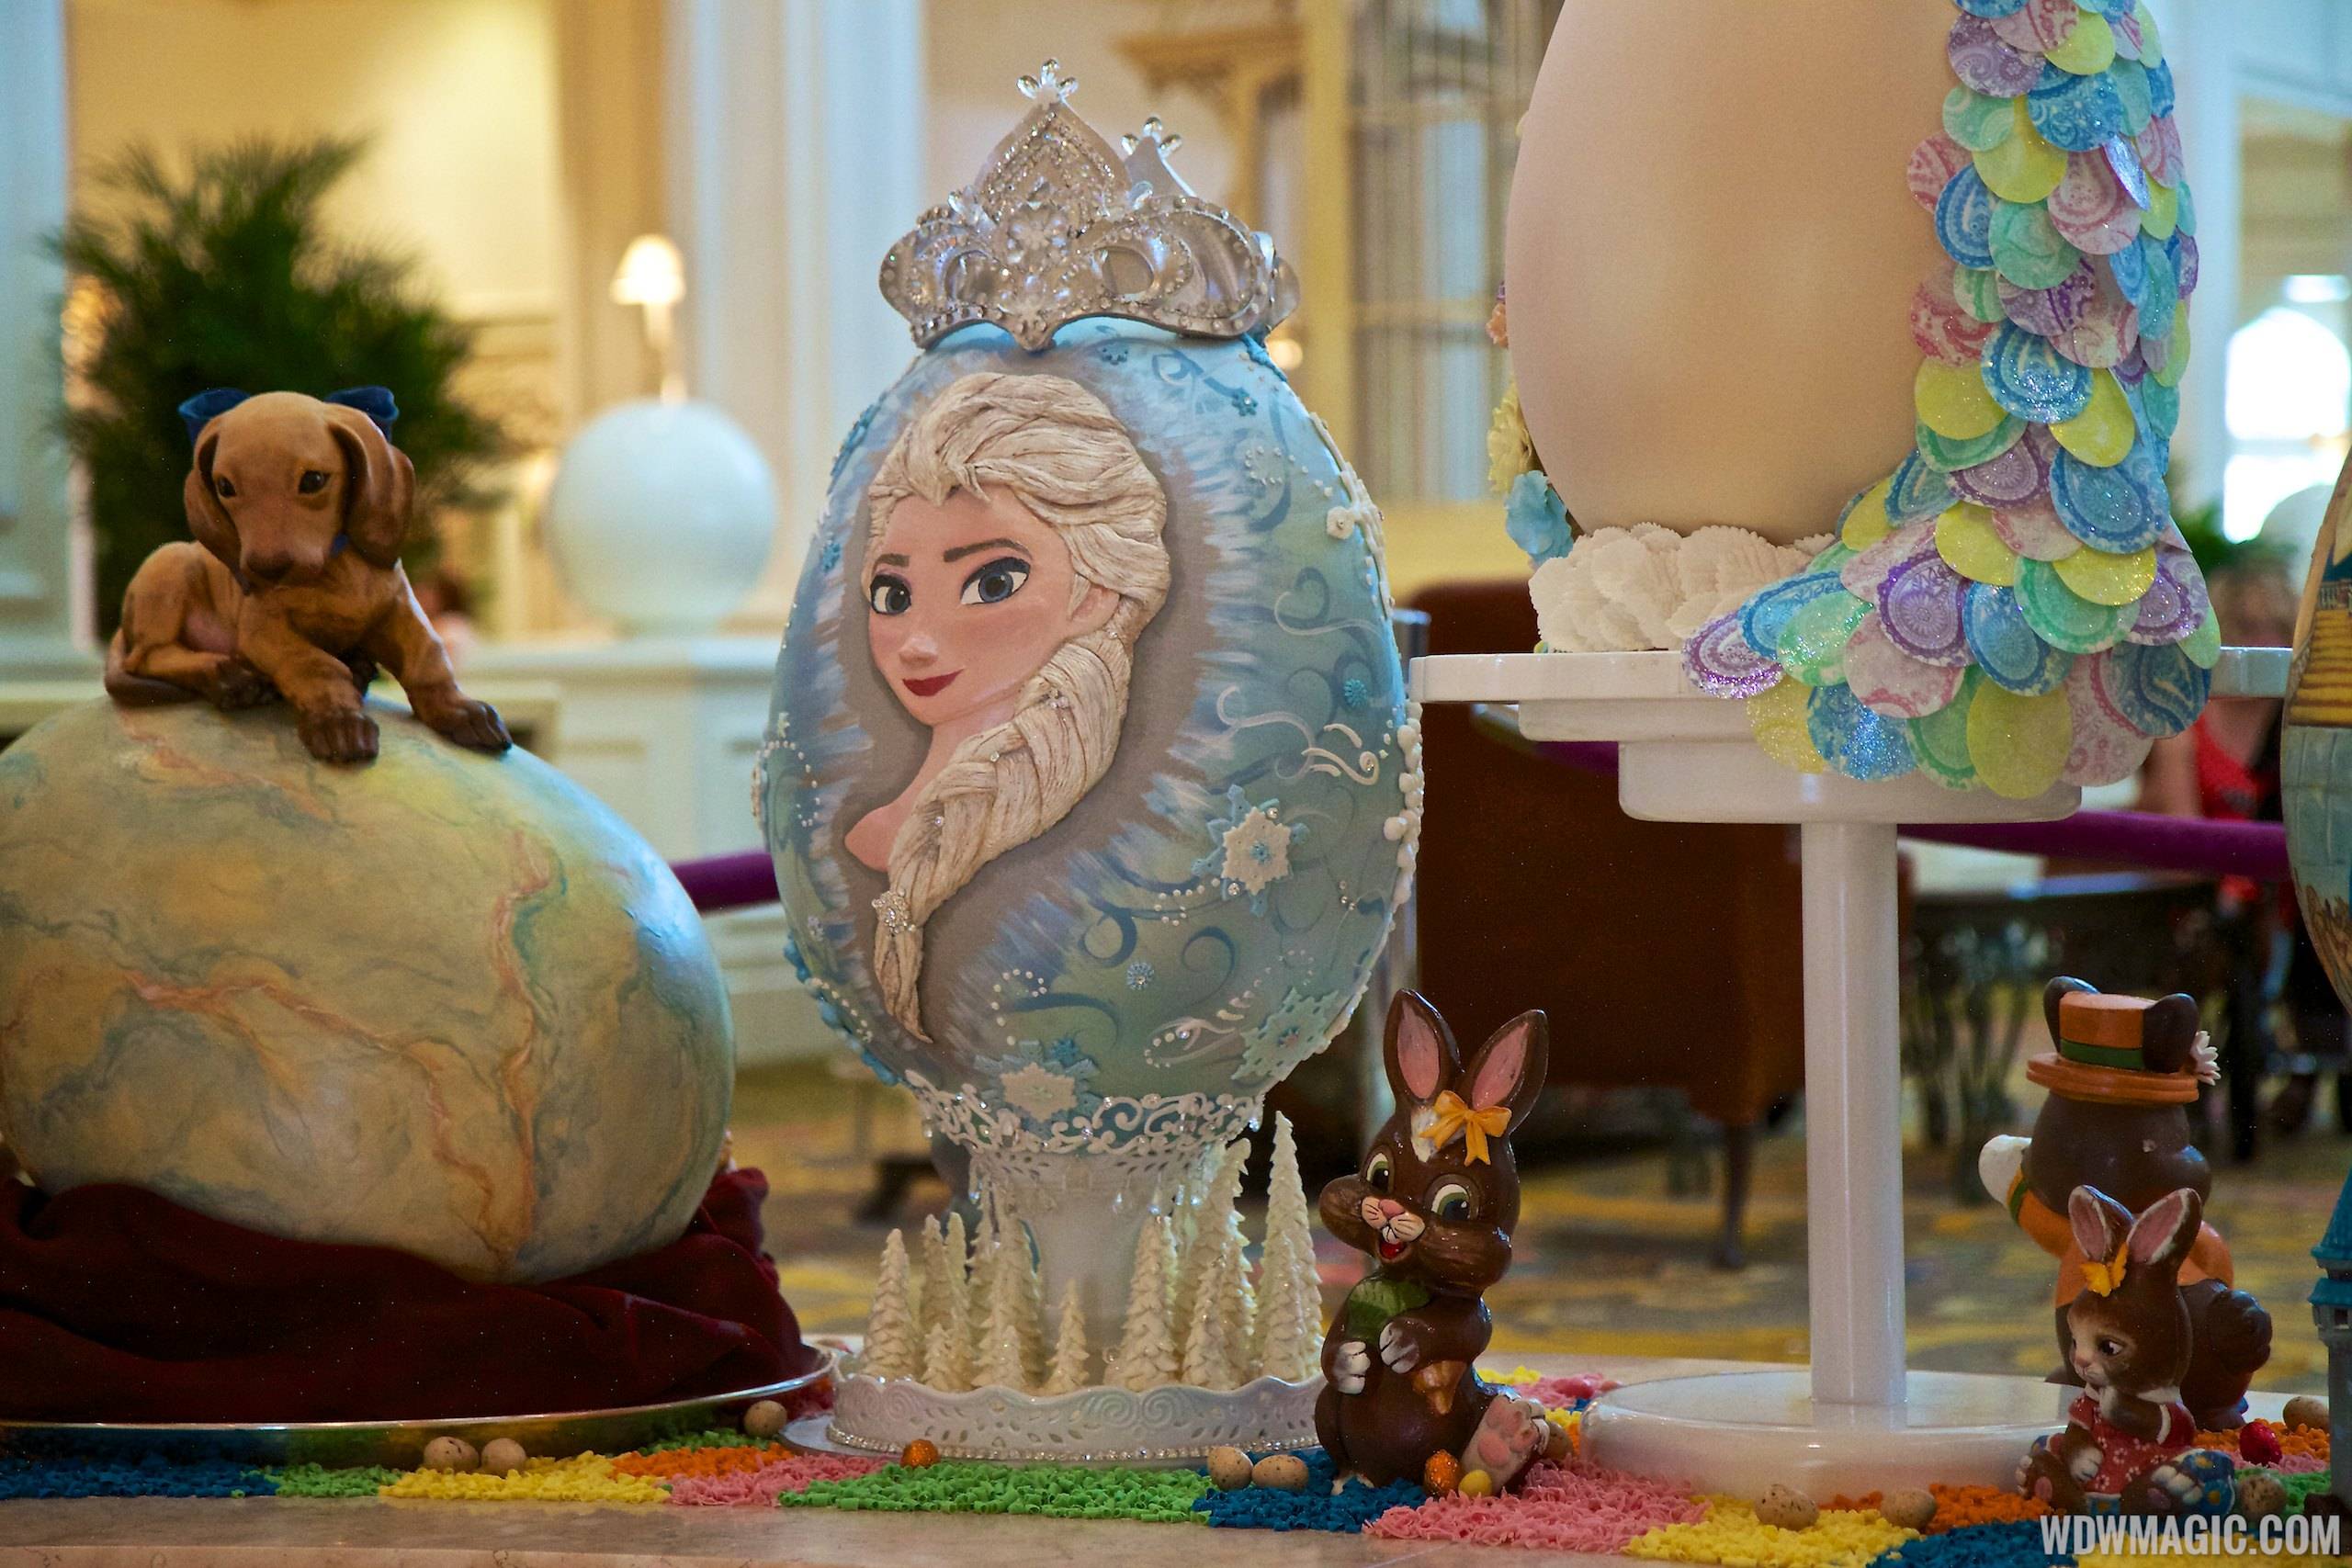 PHOTOS - The 2014 Grand Floridian Resort Easter Egg display